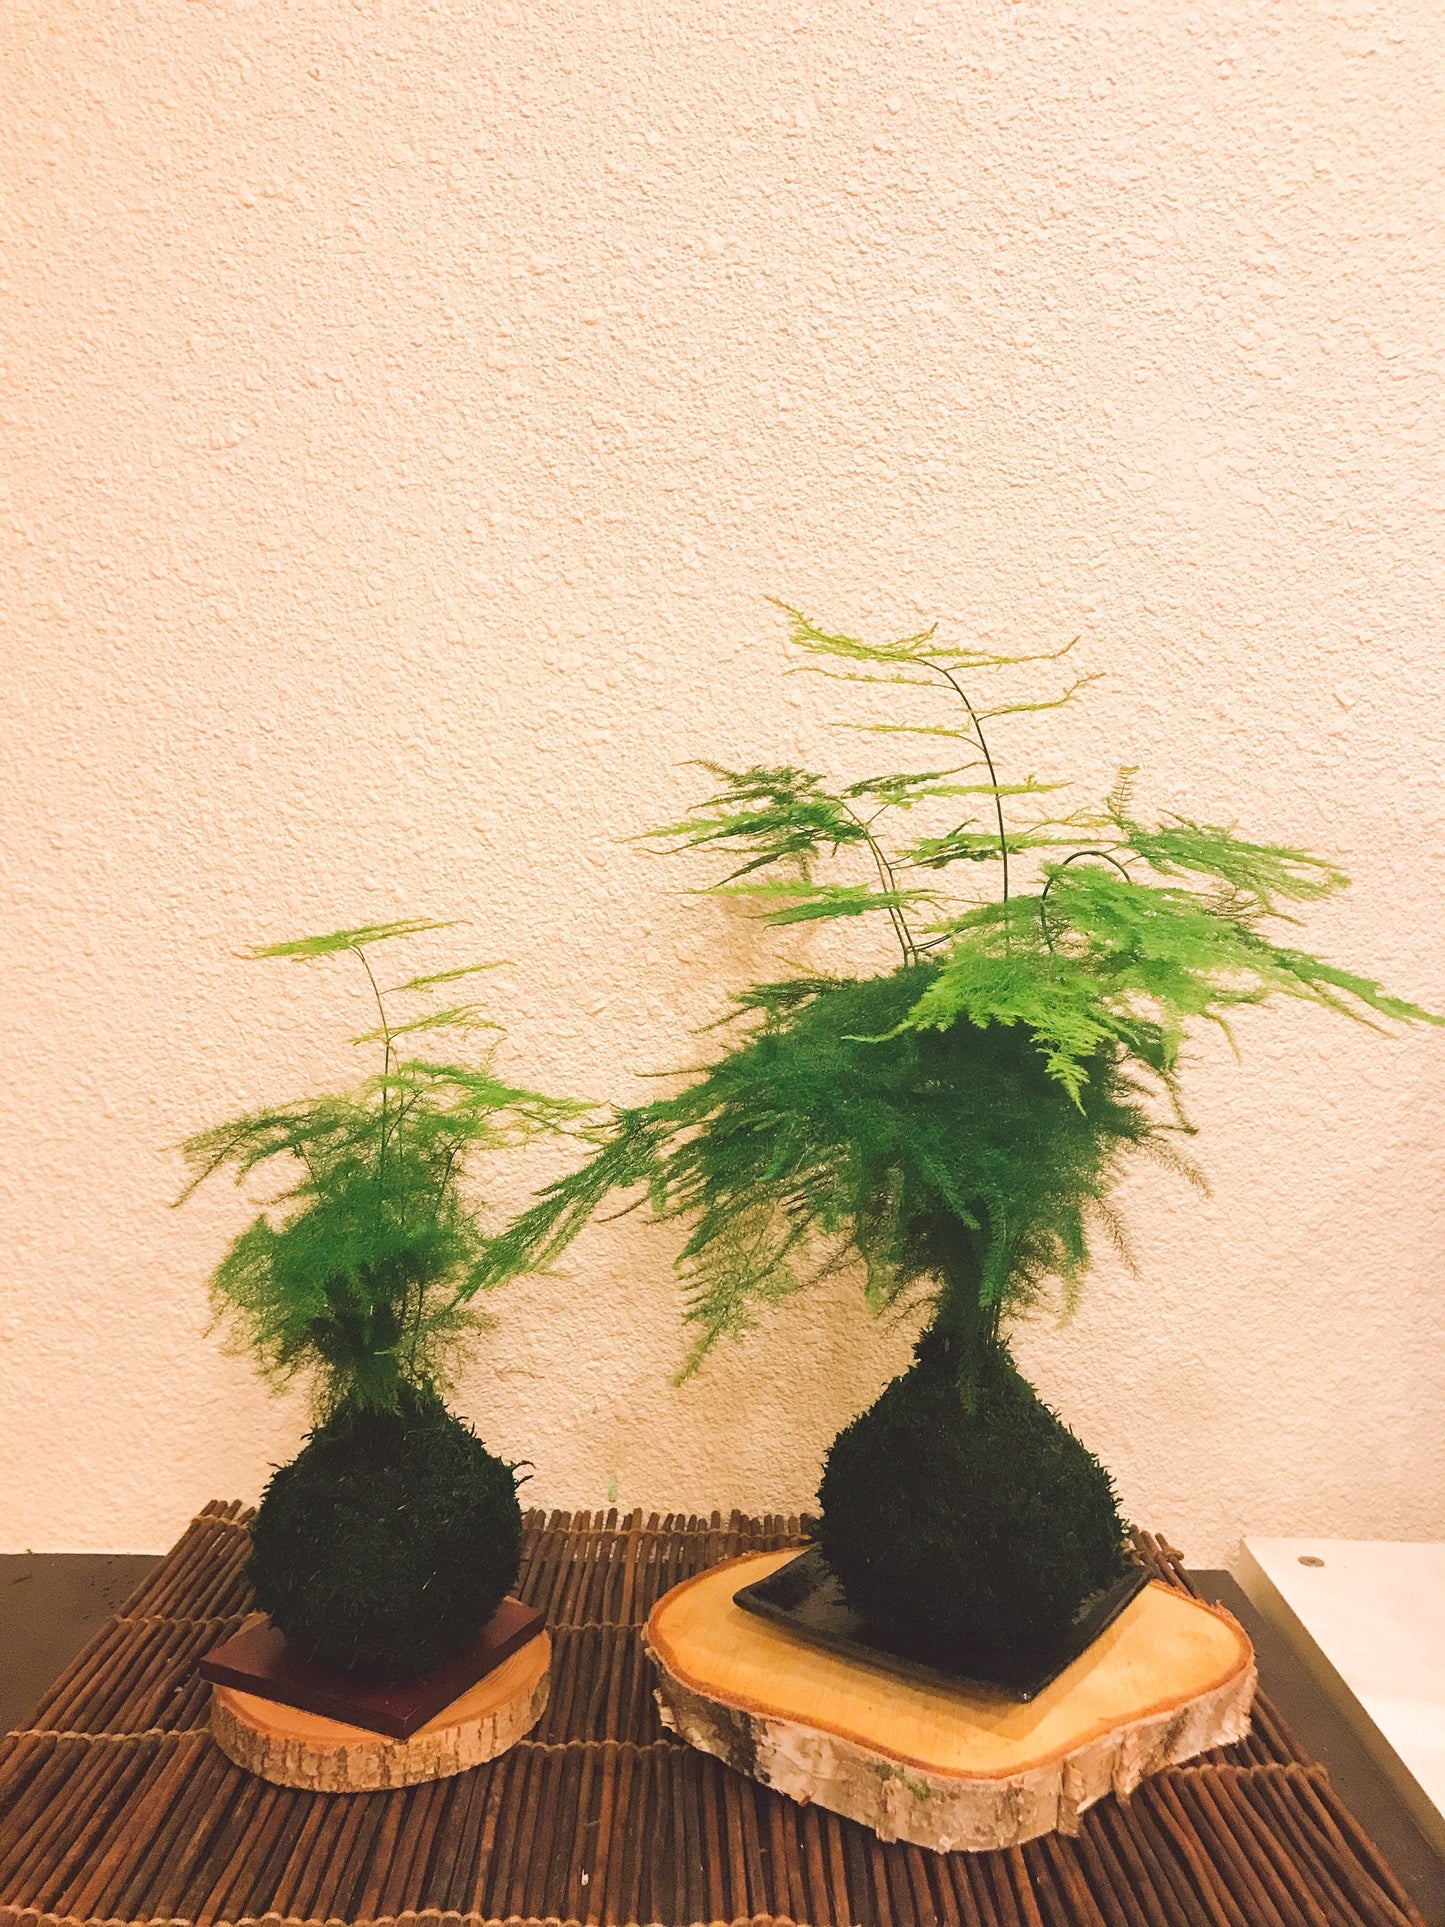 Medium Size Asparagus fern Kokedama - Bonsai Moss ball, Attractive herbaceous, lace-like foliage perennial plant.